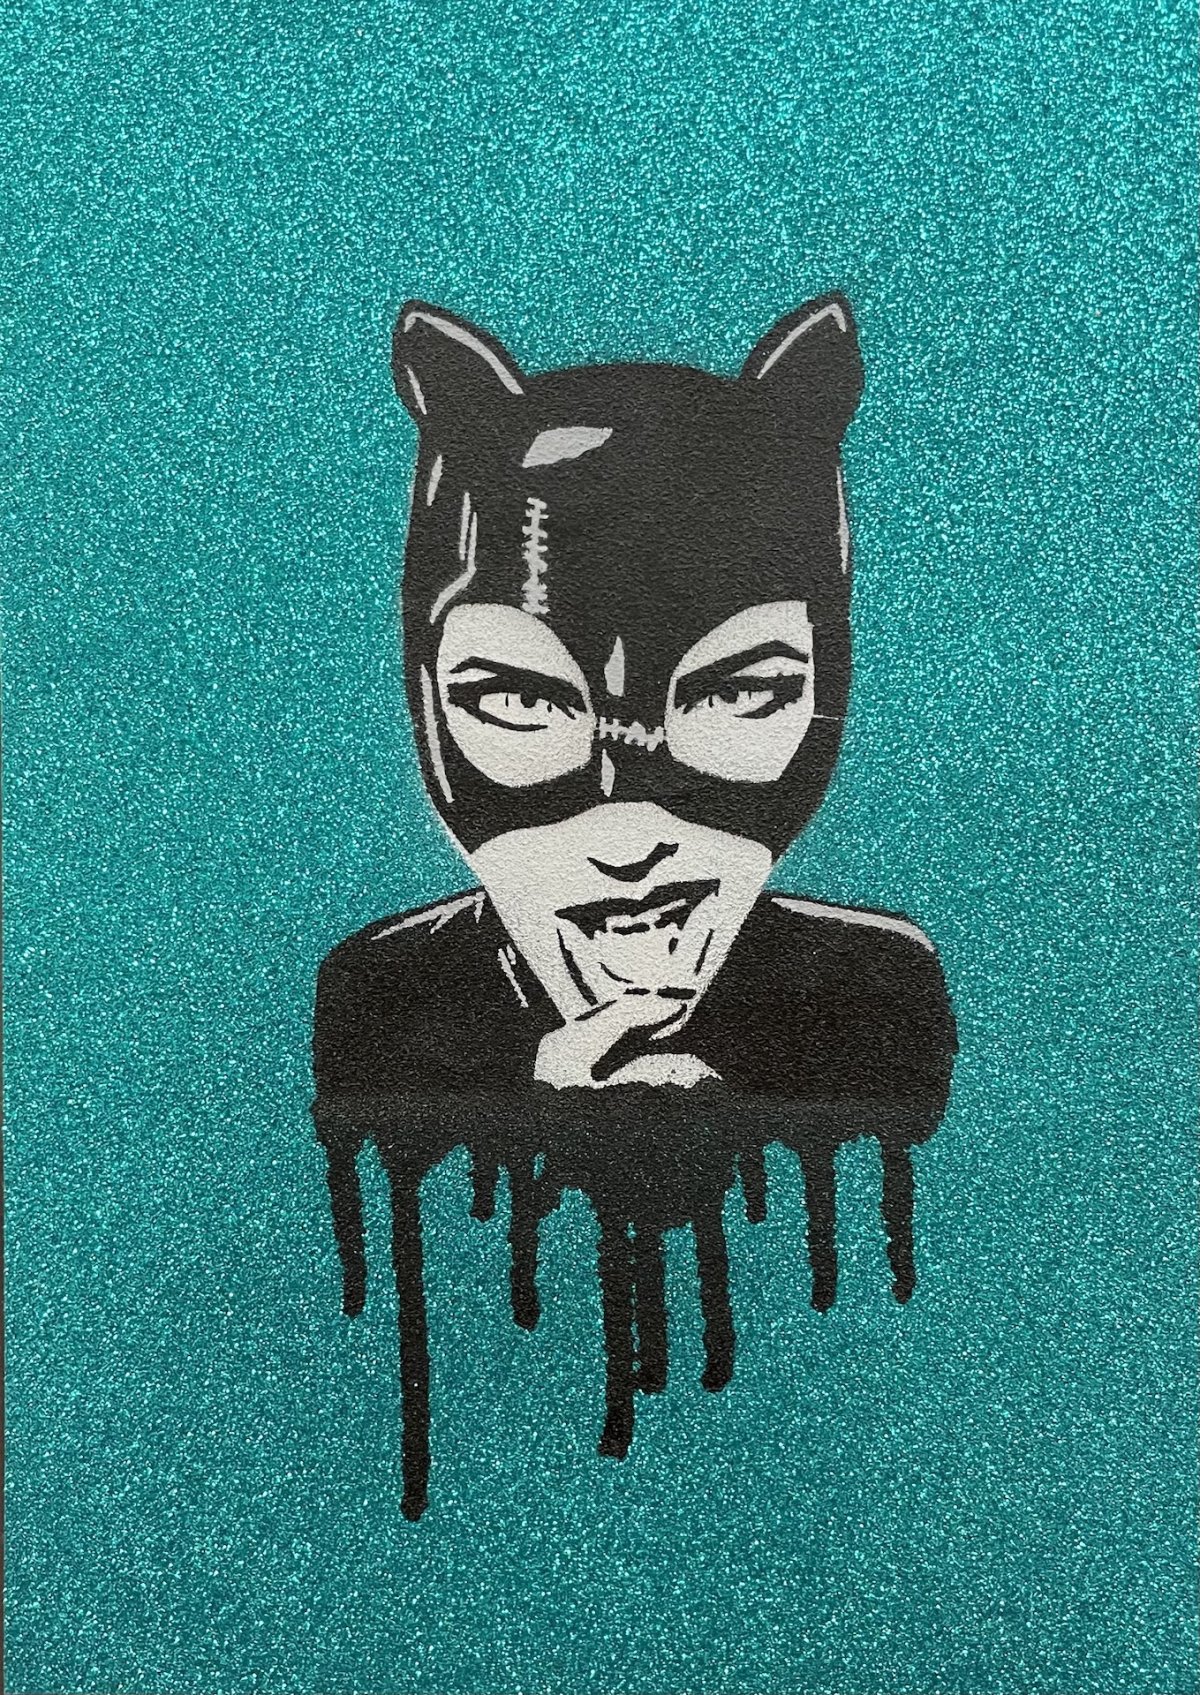 catwoman-auf-glitzer-stoff-lizartberlin-popart-streetart-urbanart-graffiti-galerie-hamburg-popstreetshop